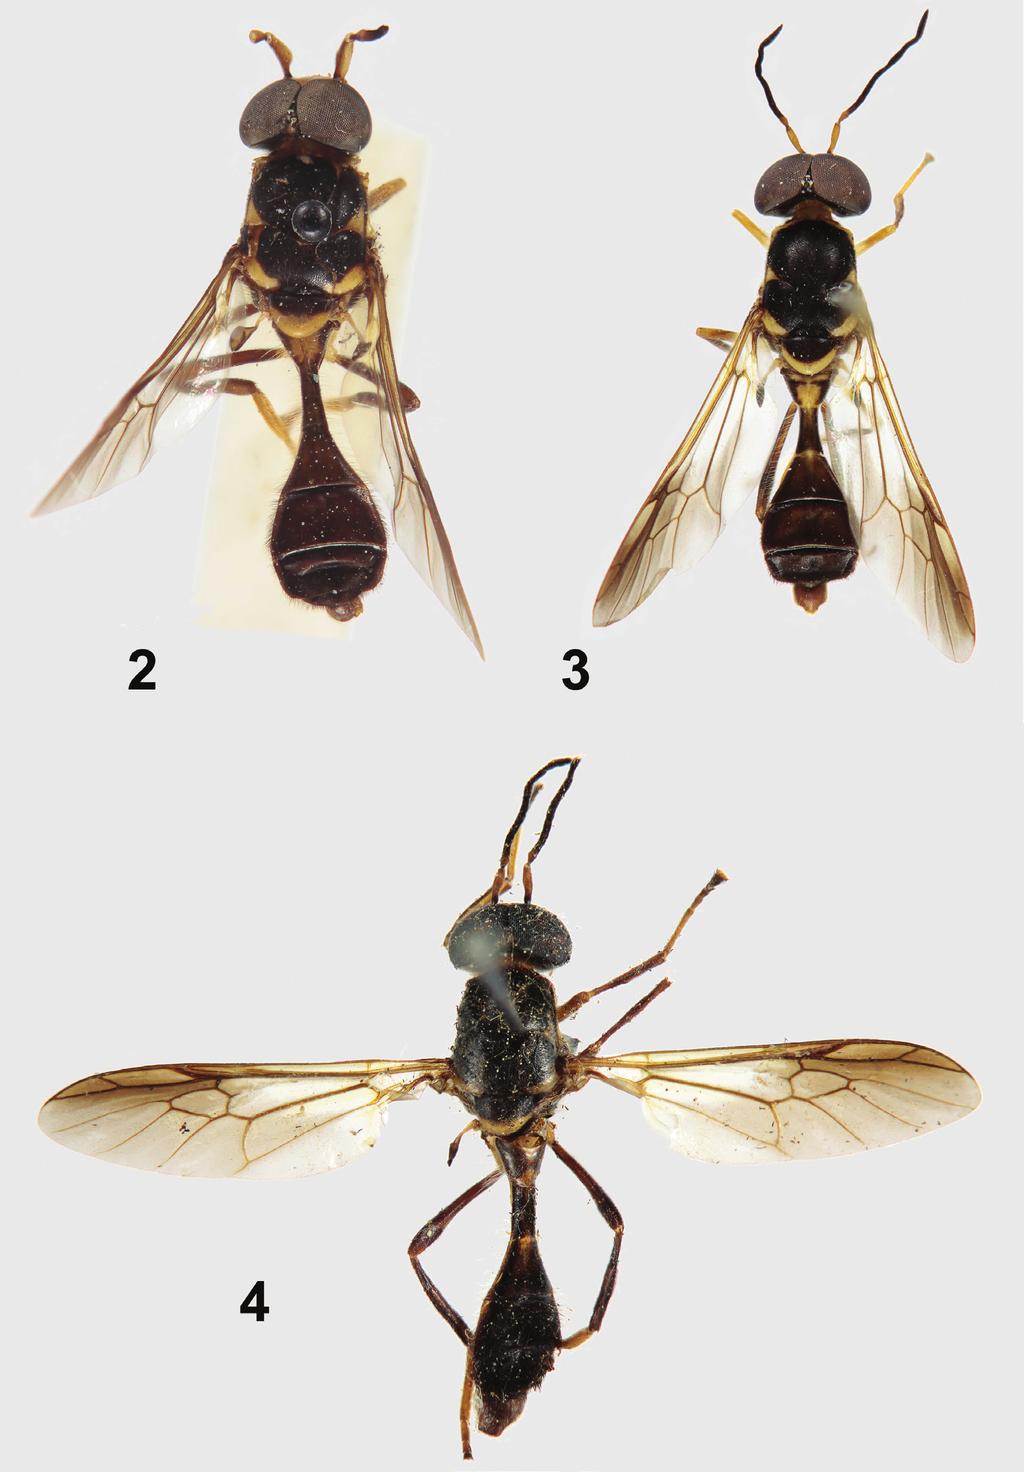 6 Norman E. Woodley / ZooKeys 238: 1 21 (2012) Figures 2 4. Primary types of Parastratiosphecomyia species.